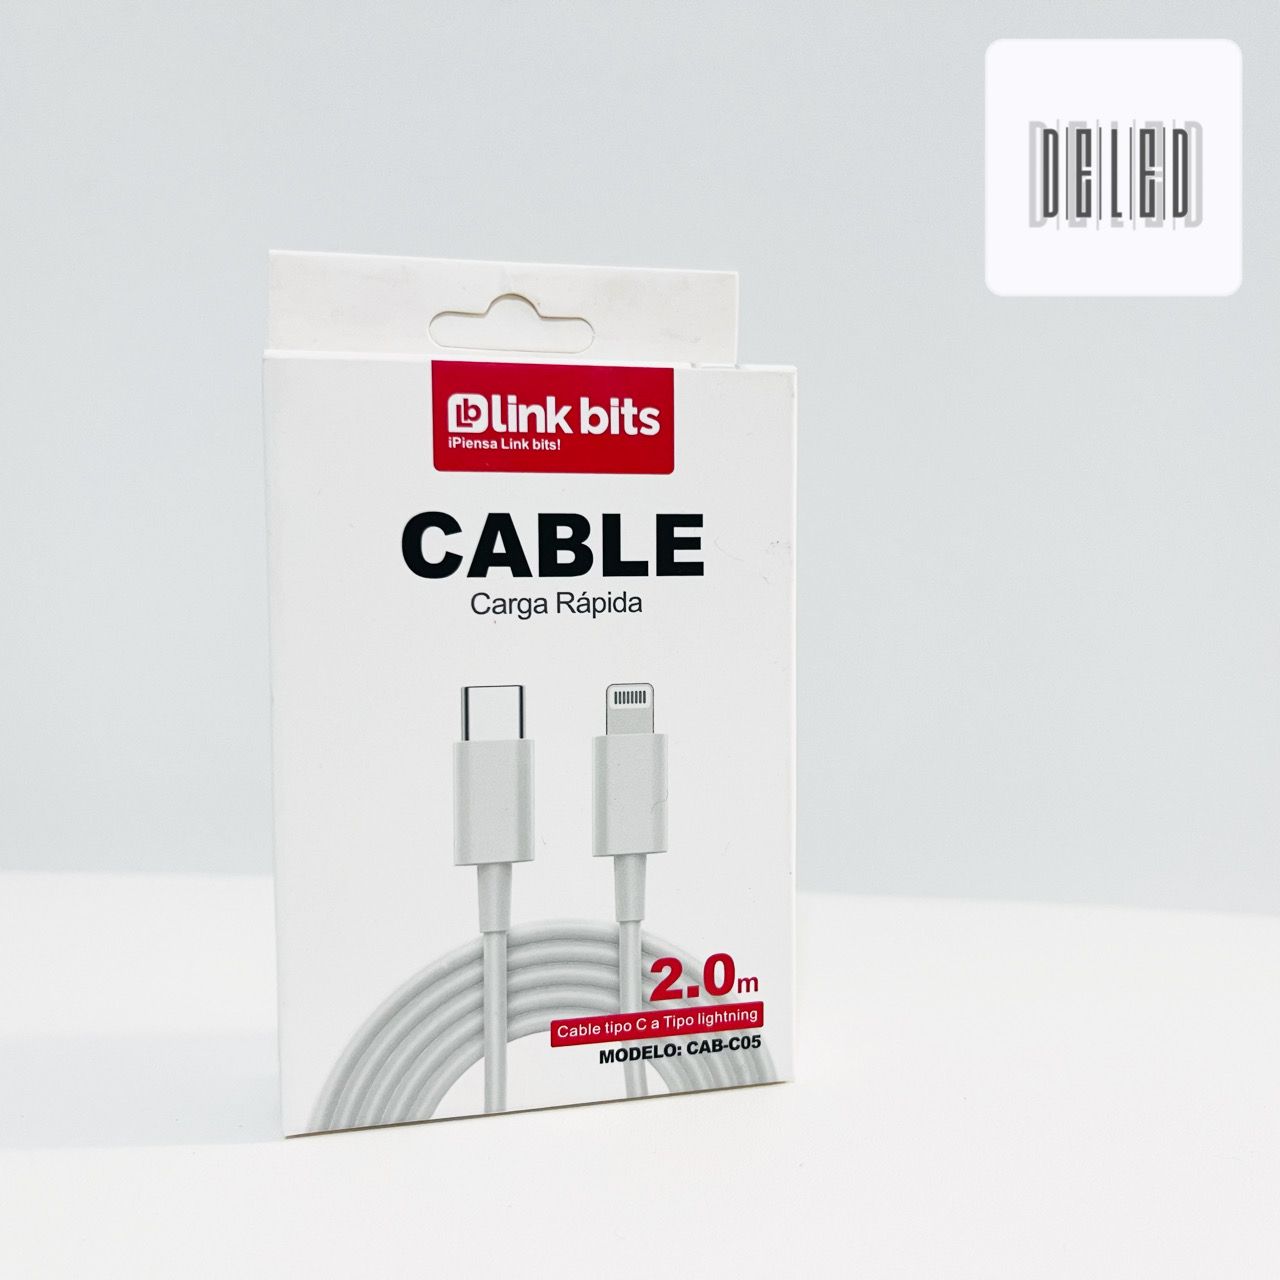 Cable de carga múltiple, cable de cargador múltiple Cable USB